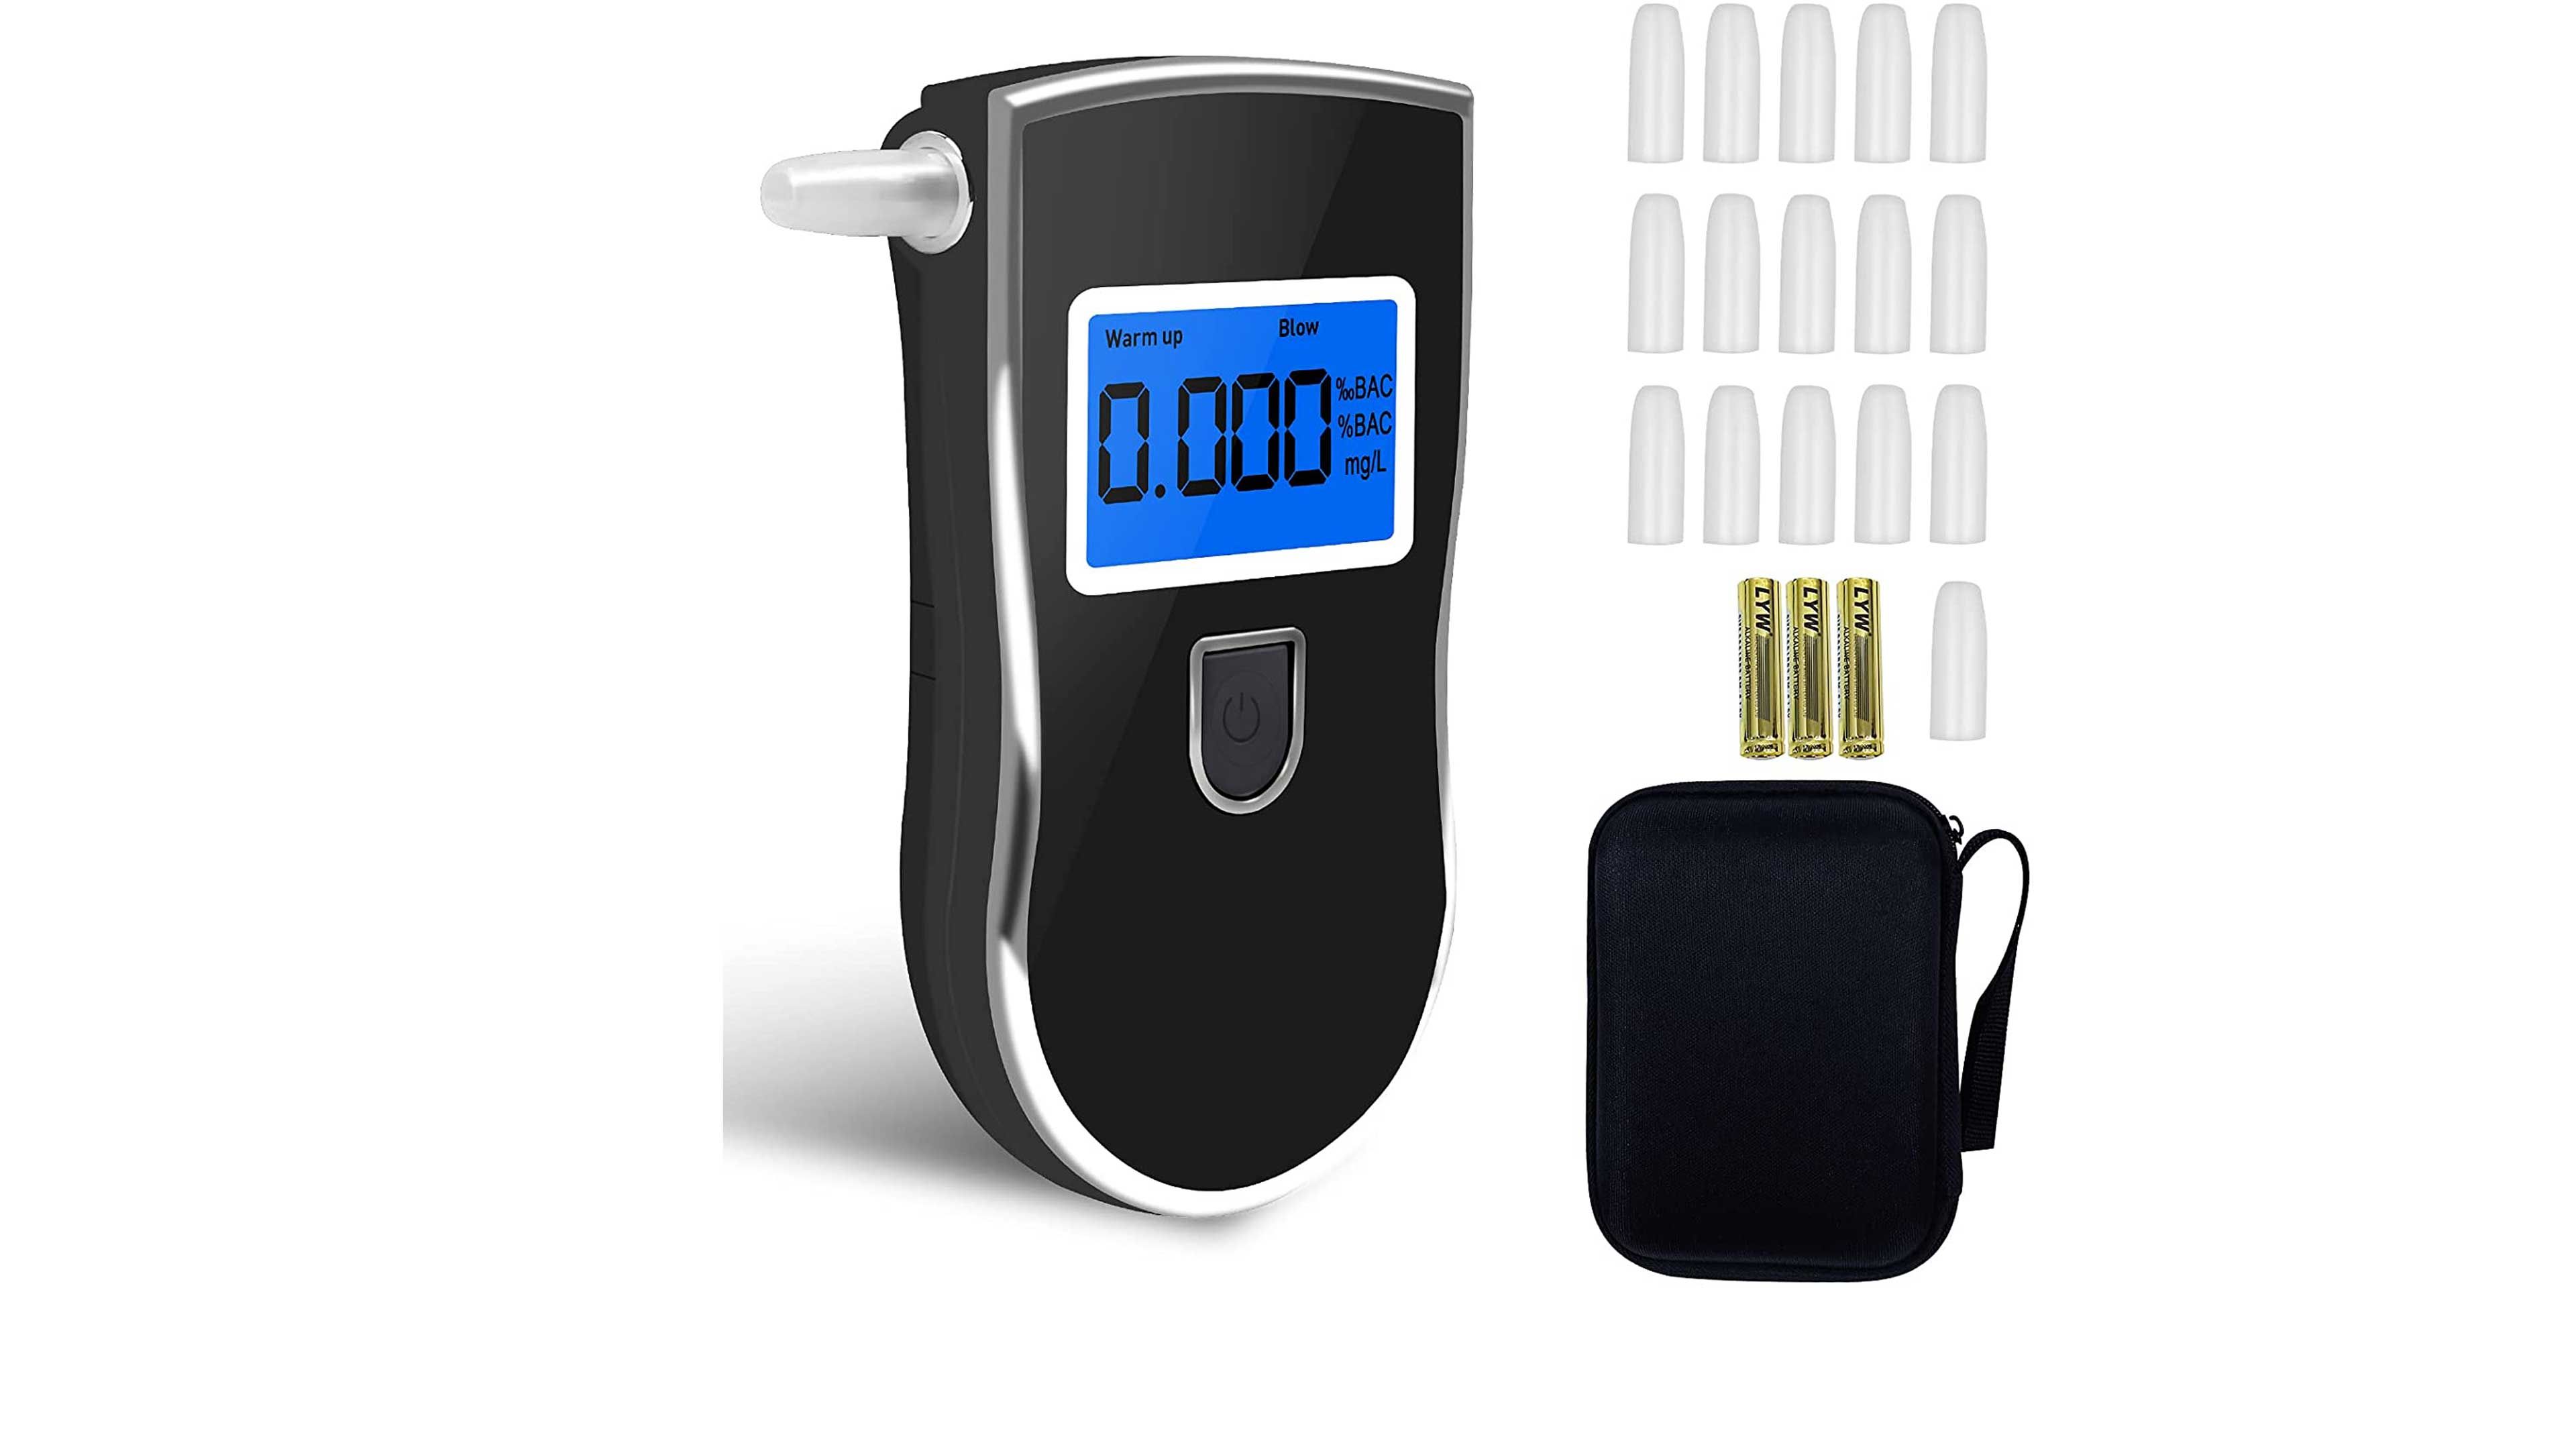 Alcoholimetro - Compra Alcoholimetro Homologado y Fiable - Norauto